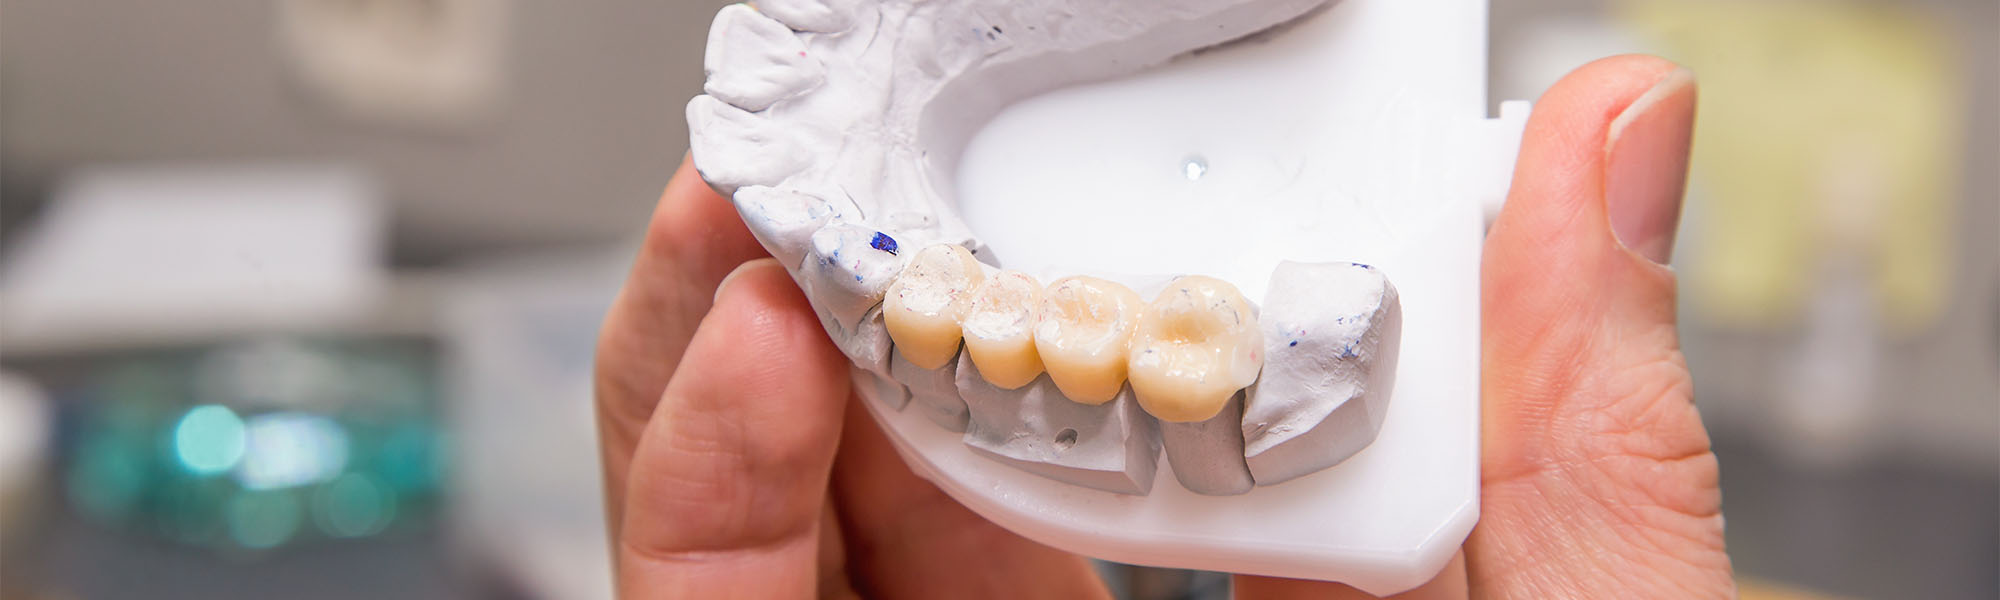 What Are Dental Bridges?